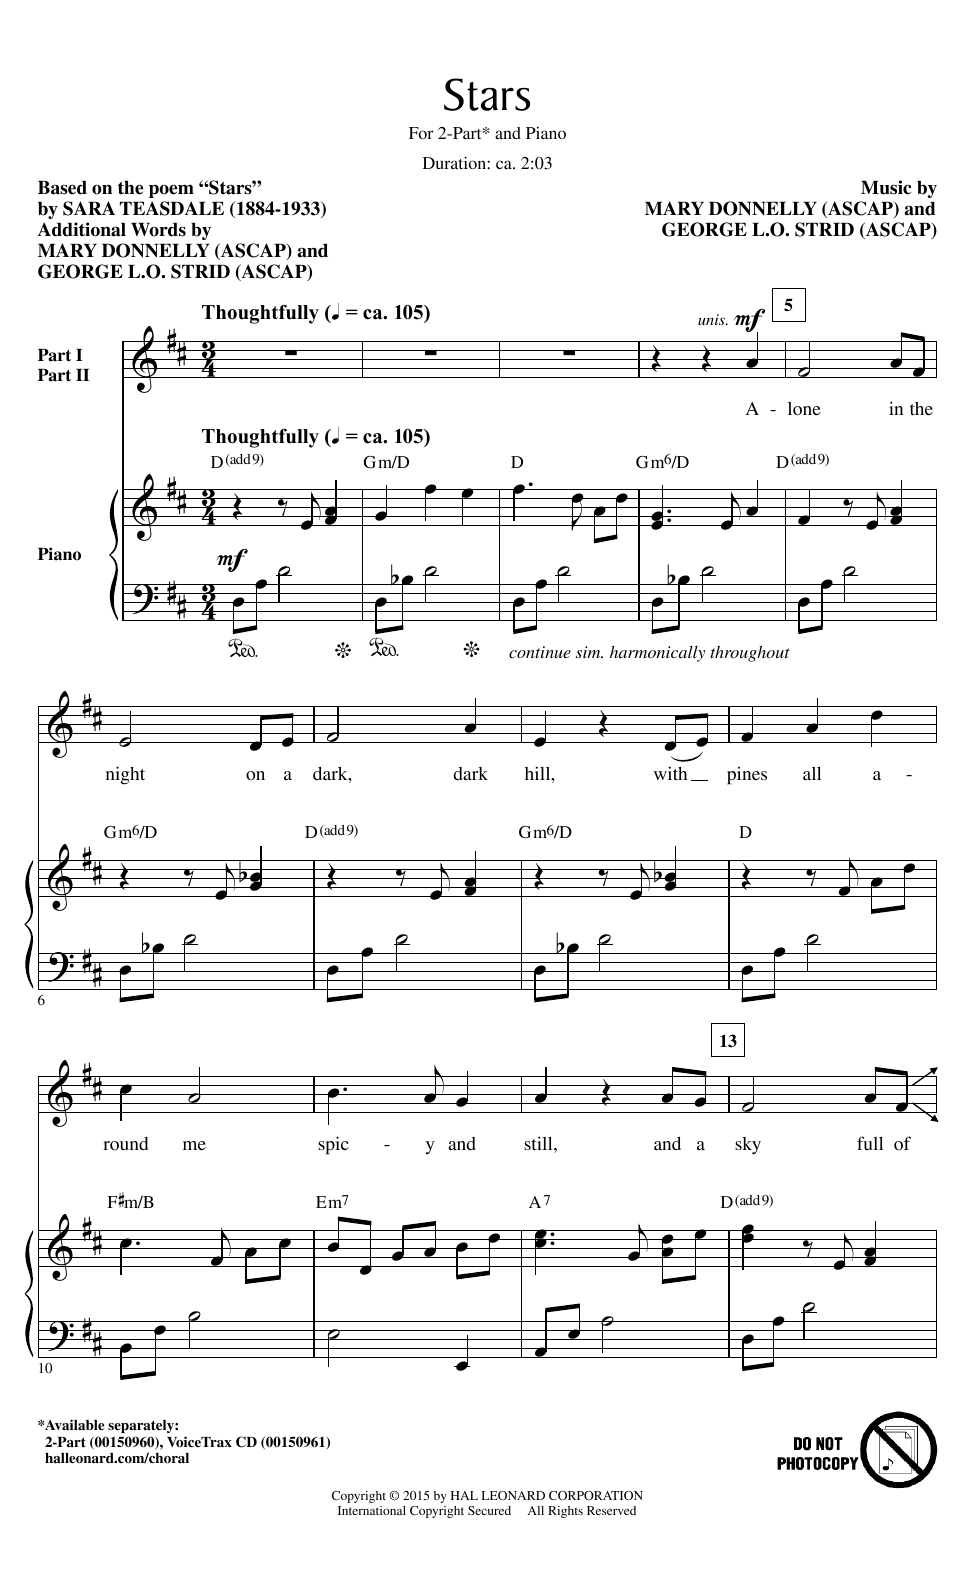 George. L.O. Strid Stars Sheet Music Notes & Chords for 2-Part Choir - Download or Print PDF